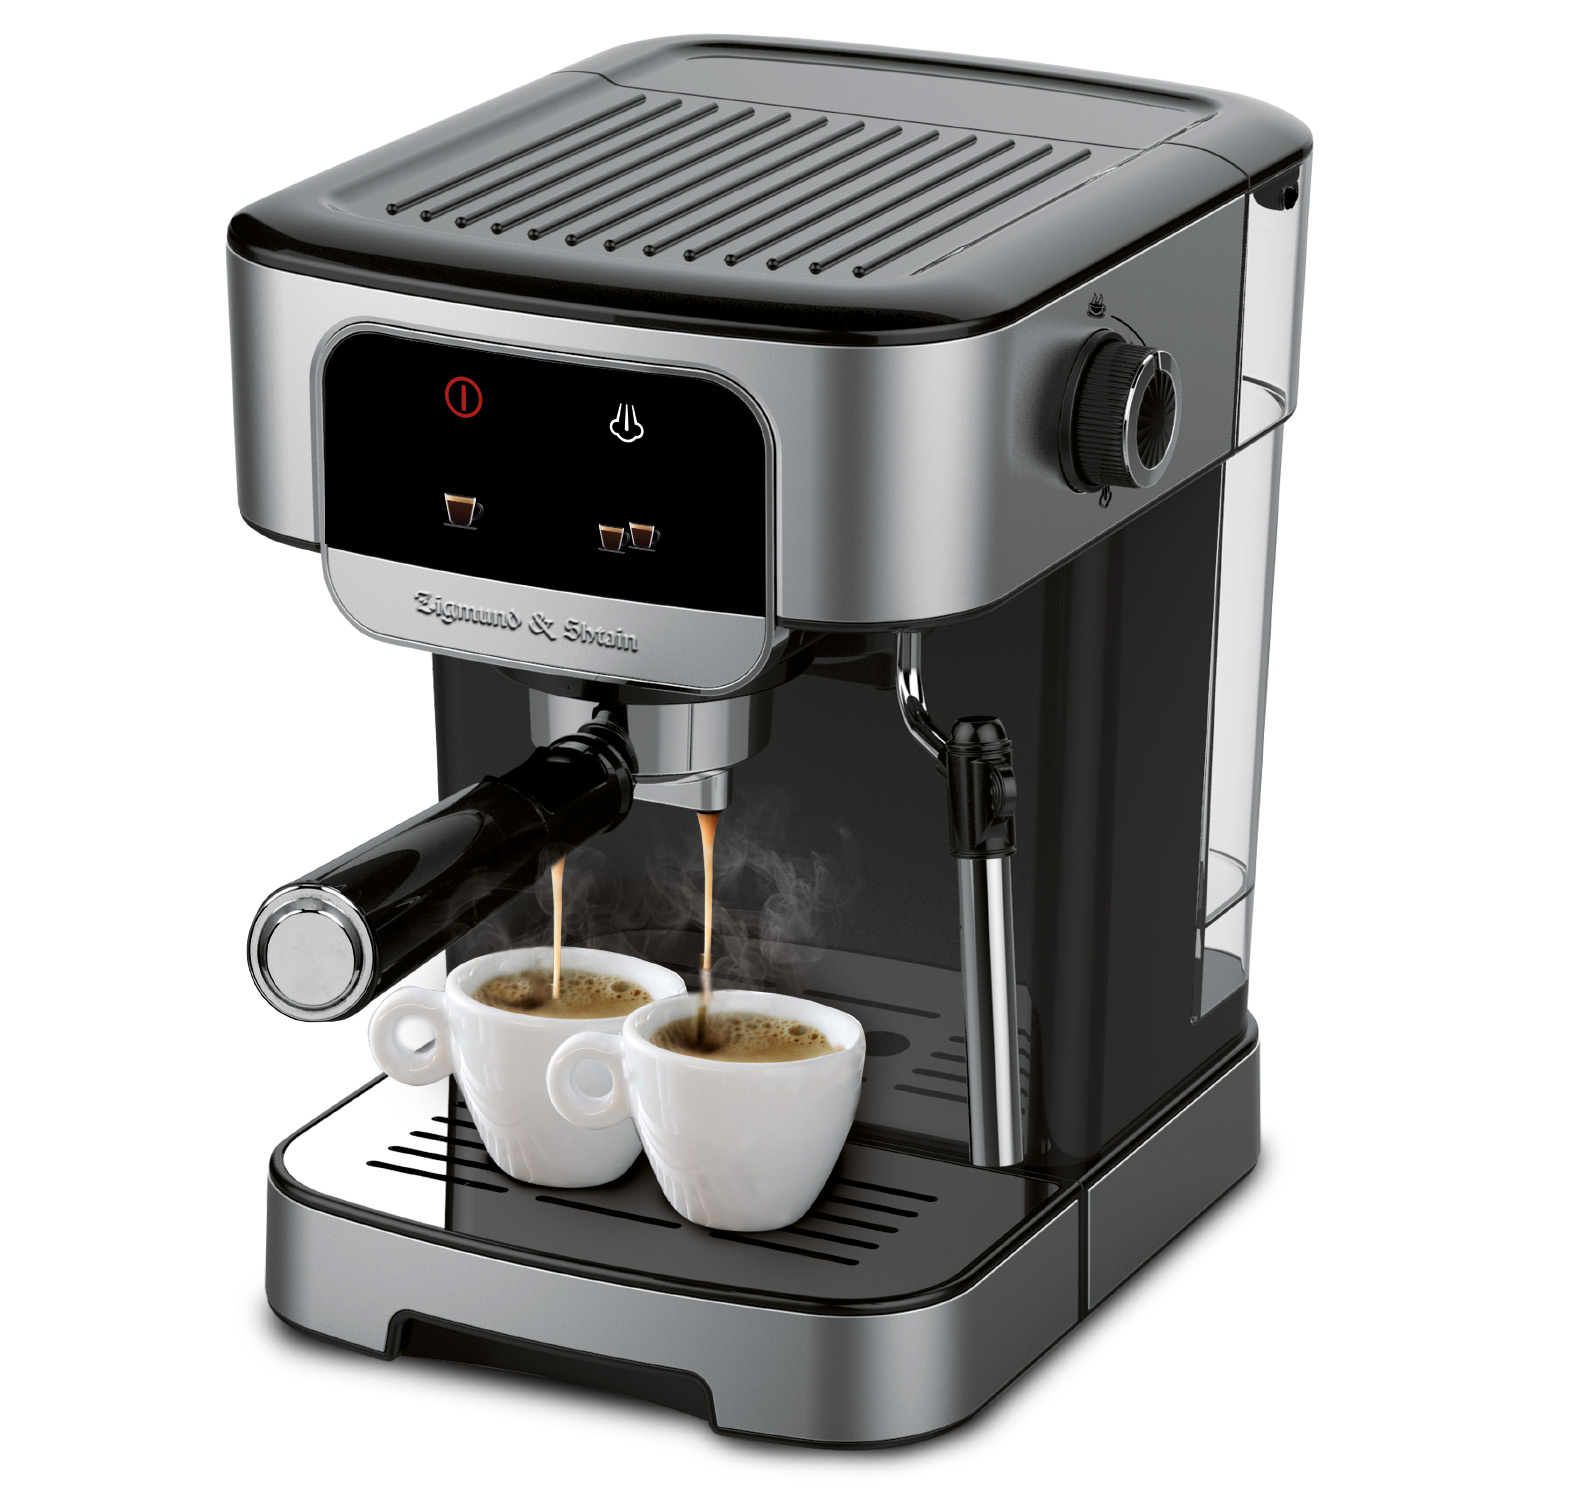 Кофеварка Zigmund & Shtain Al caffe ZCM-881